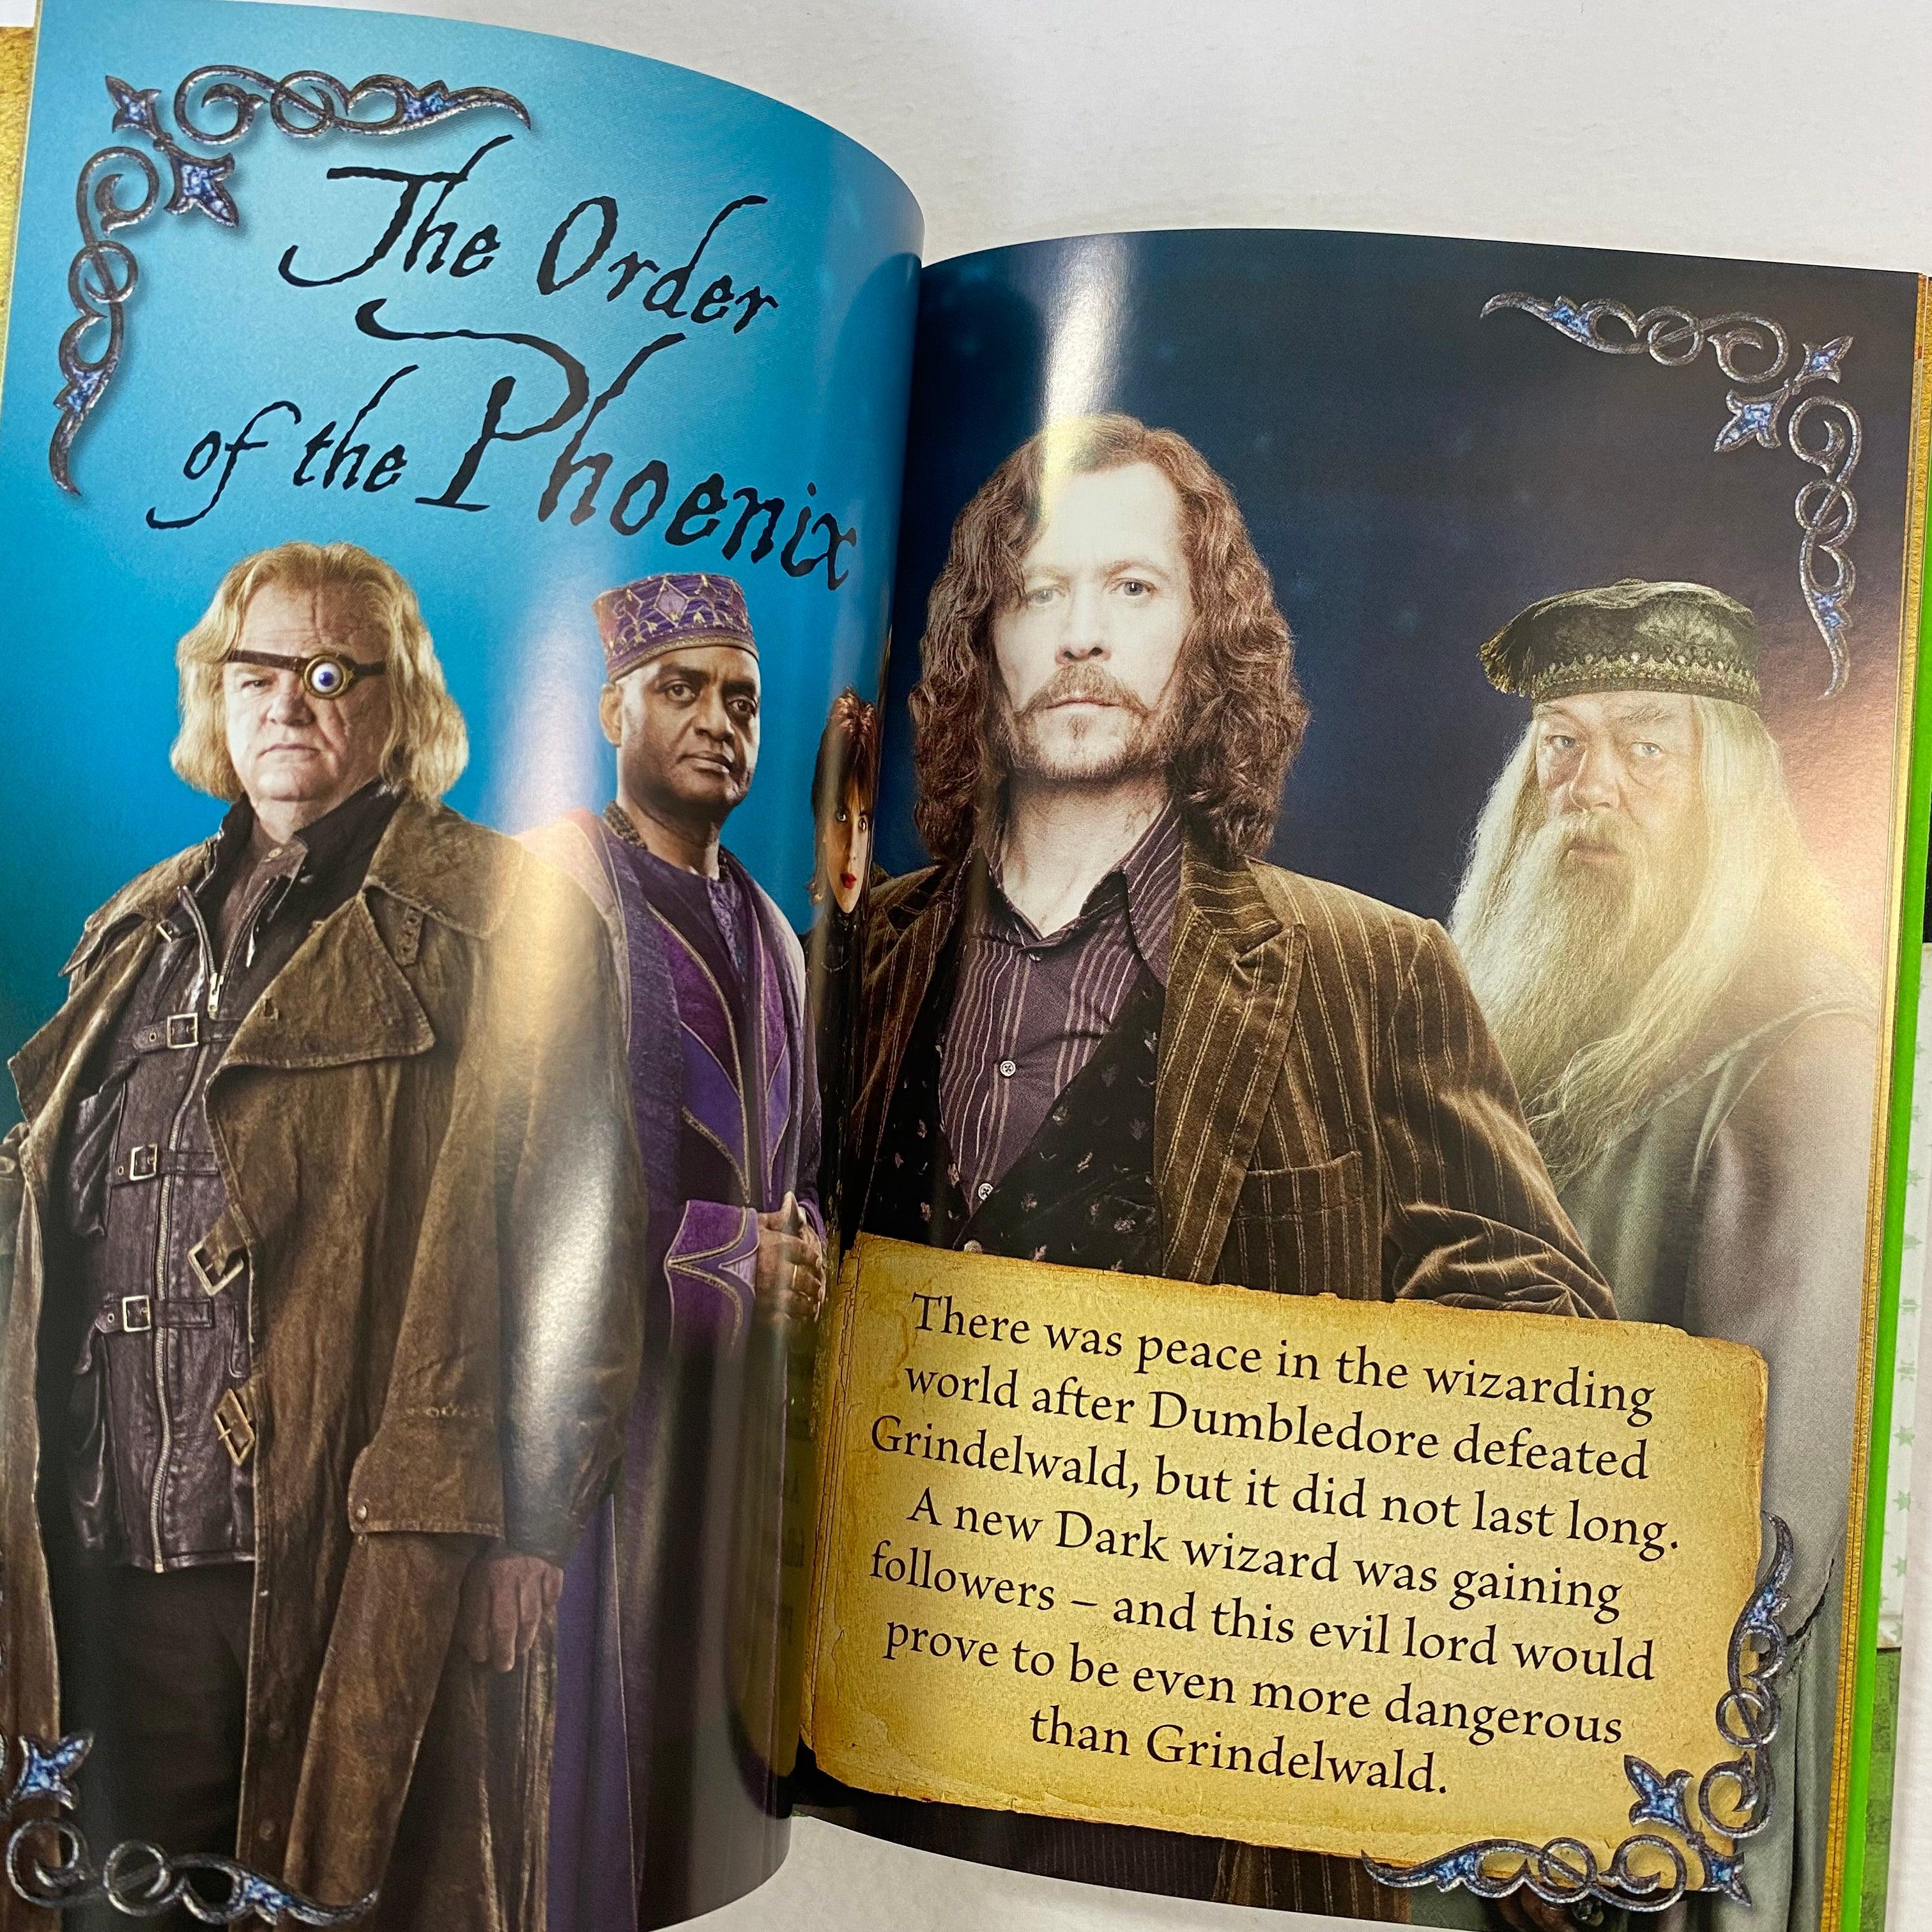 Harry Potter - Albus Dumbledore Cinematic Guide - Spectrawide Bookstore